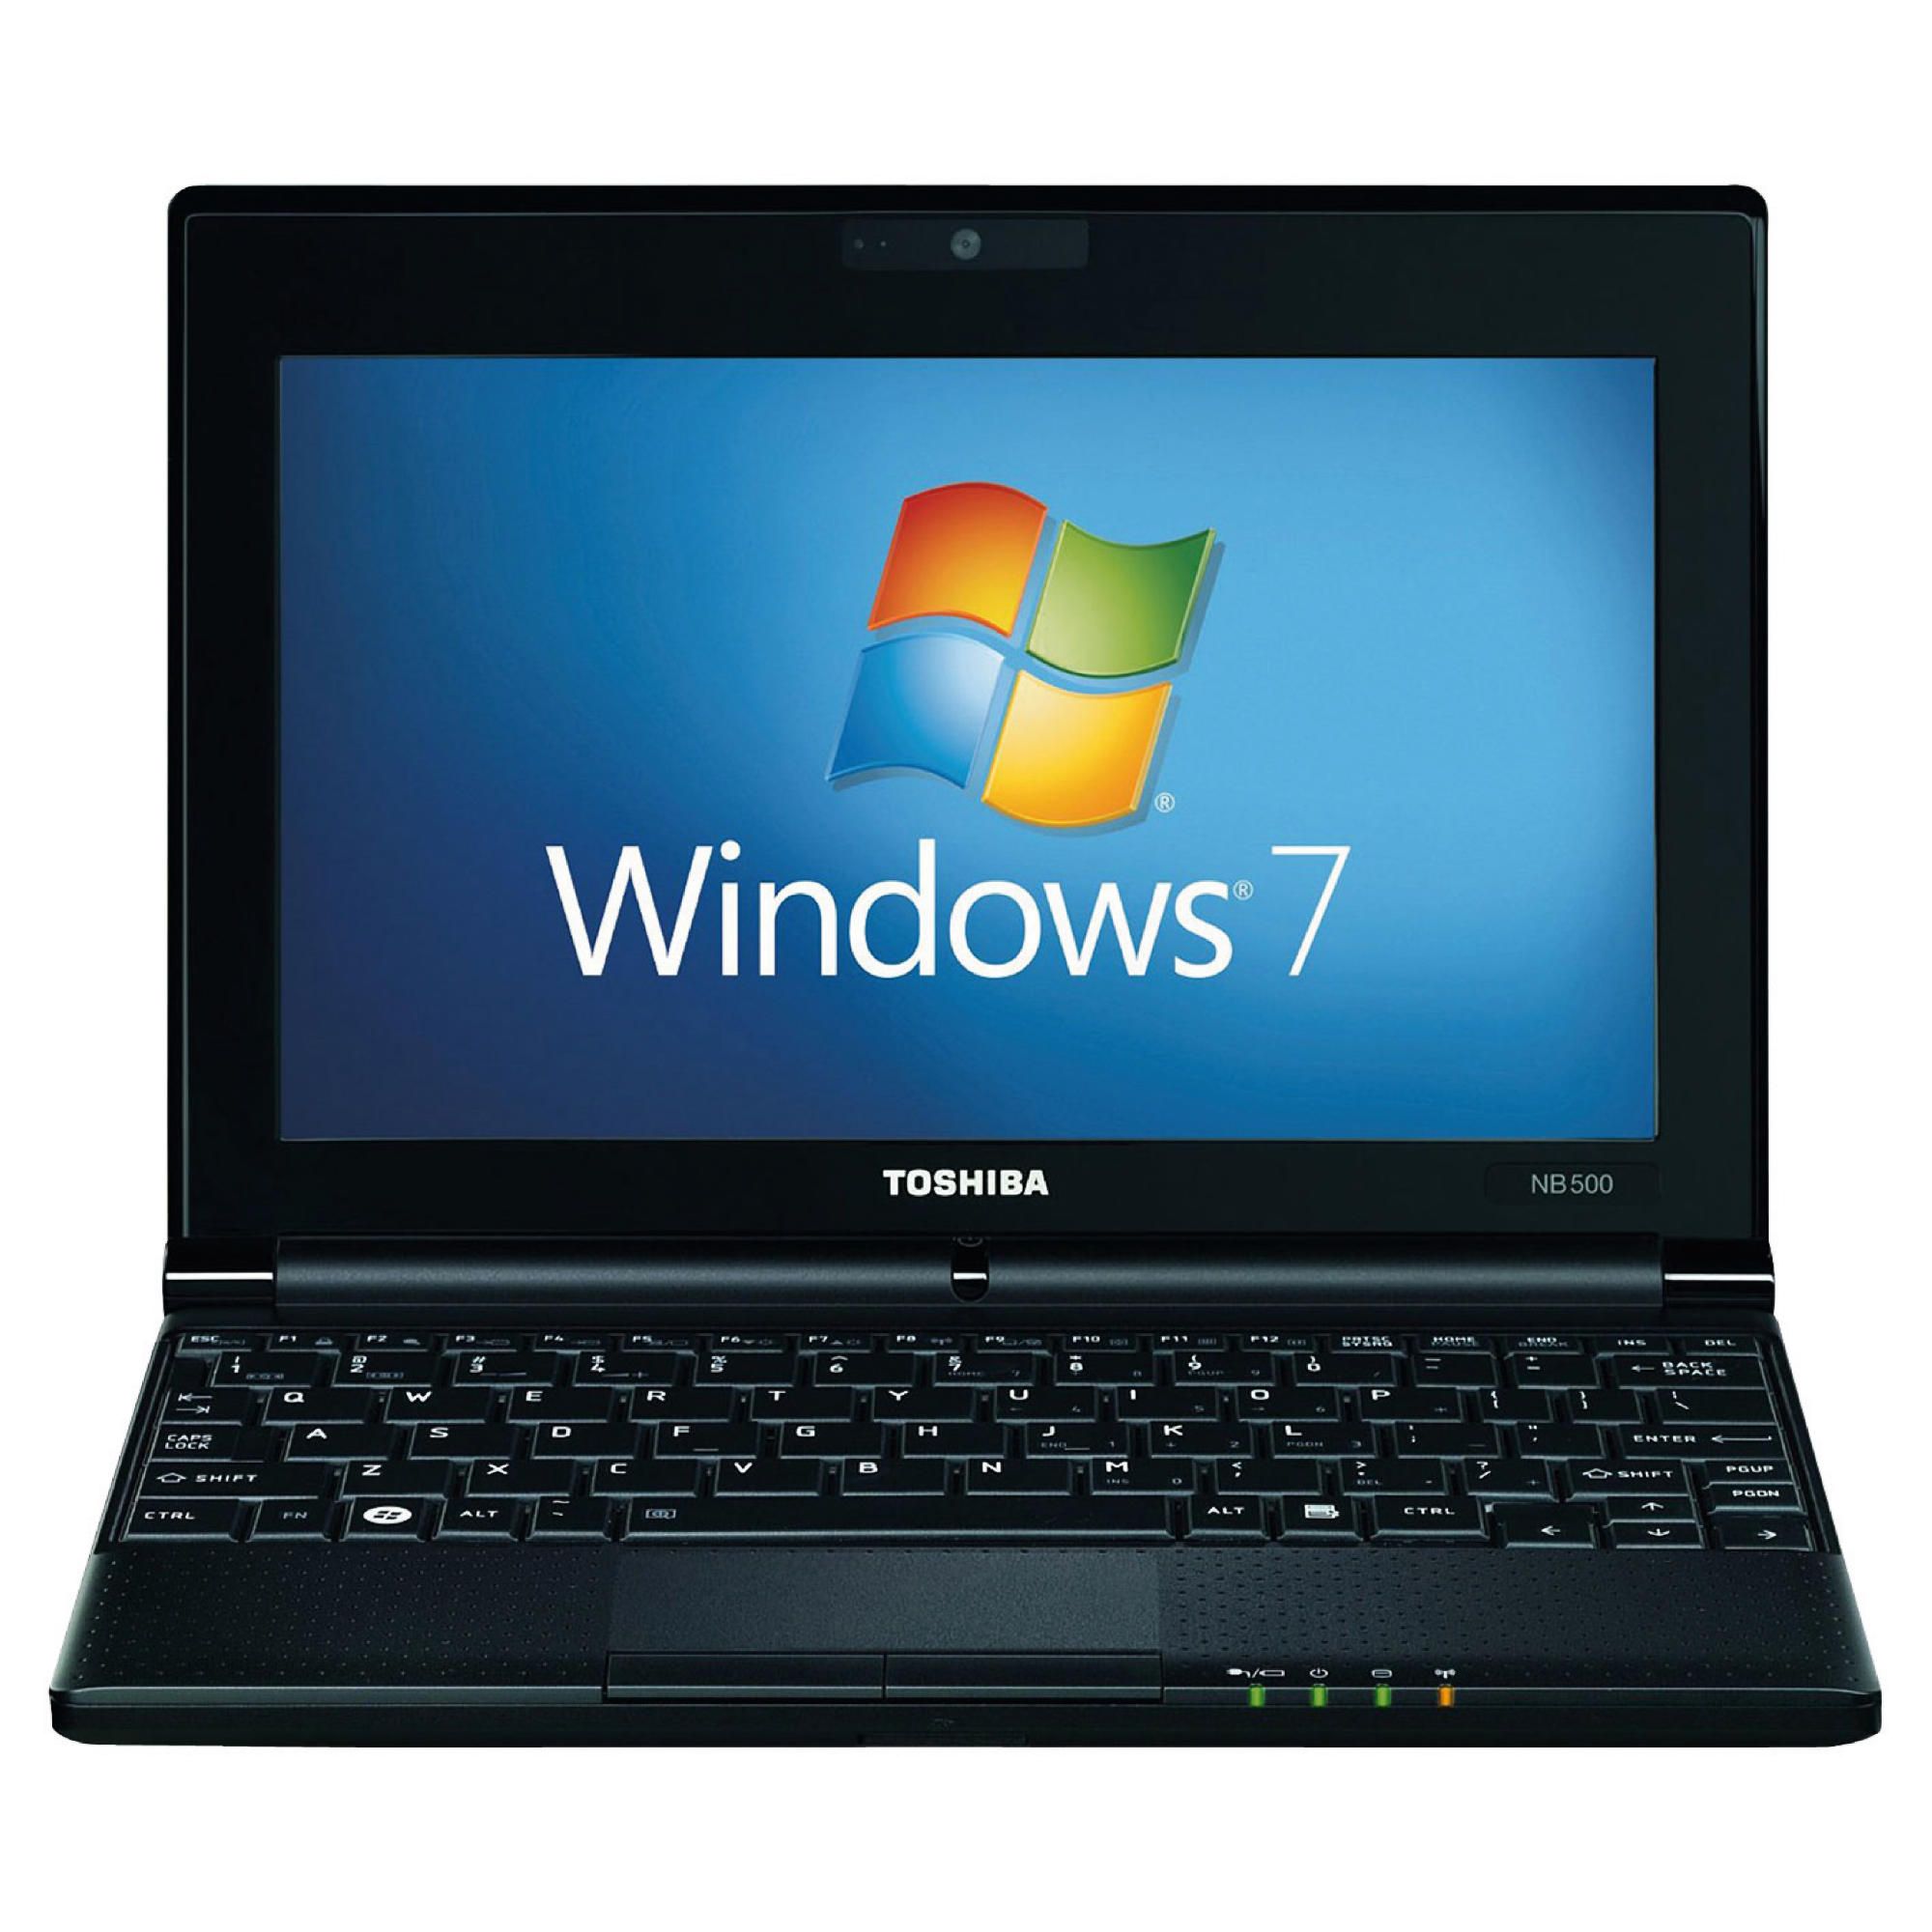 Toshiba NB500-11D Netbook Intel Atom (N455) 1.66GHz 1024MB 250GB 10.1 inch TFT WLAN Windows 7 Starter (Intel GMA 3150) (Matt Black) at Tescos Direct